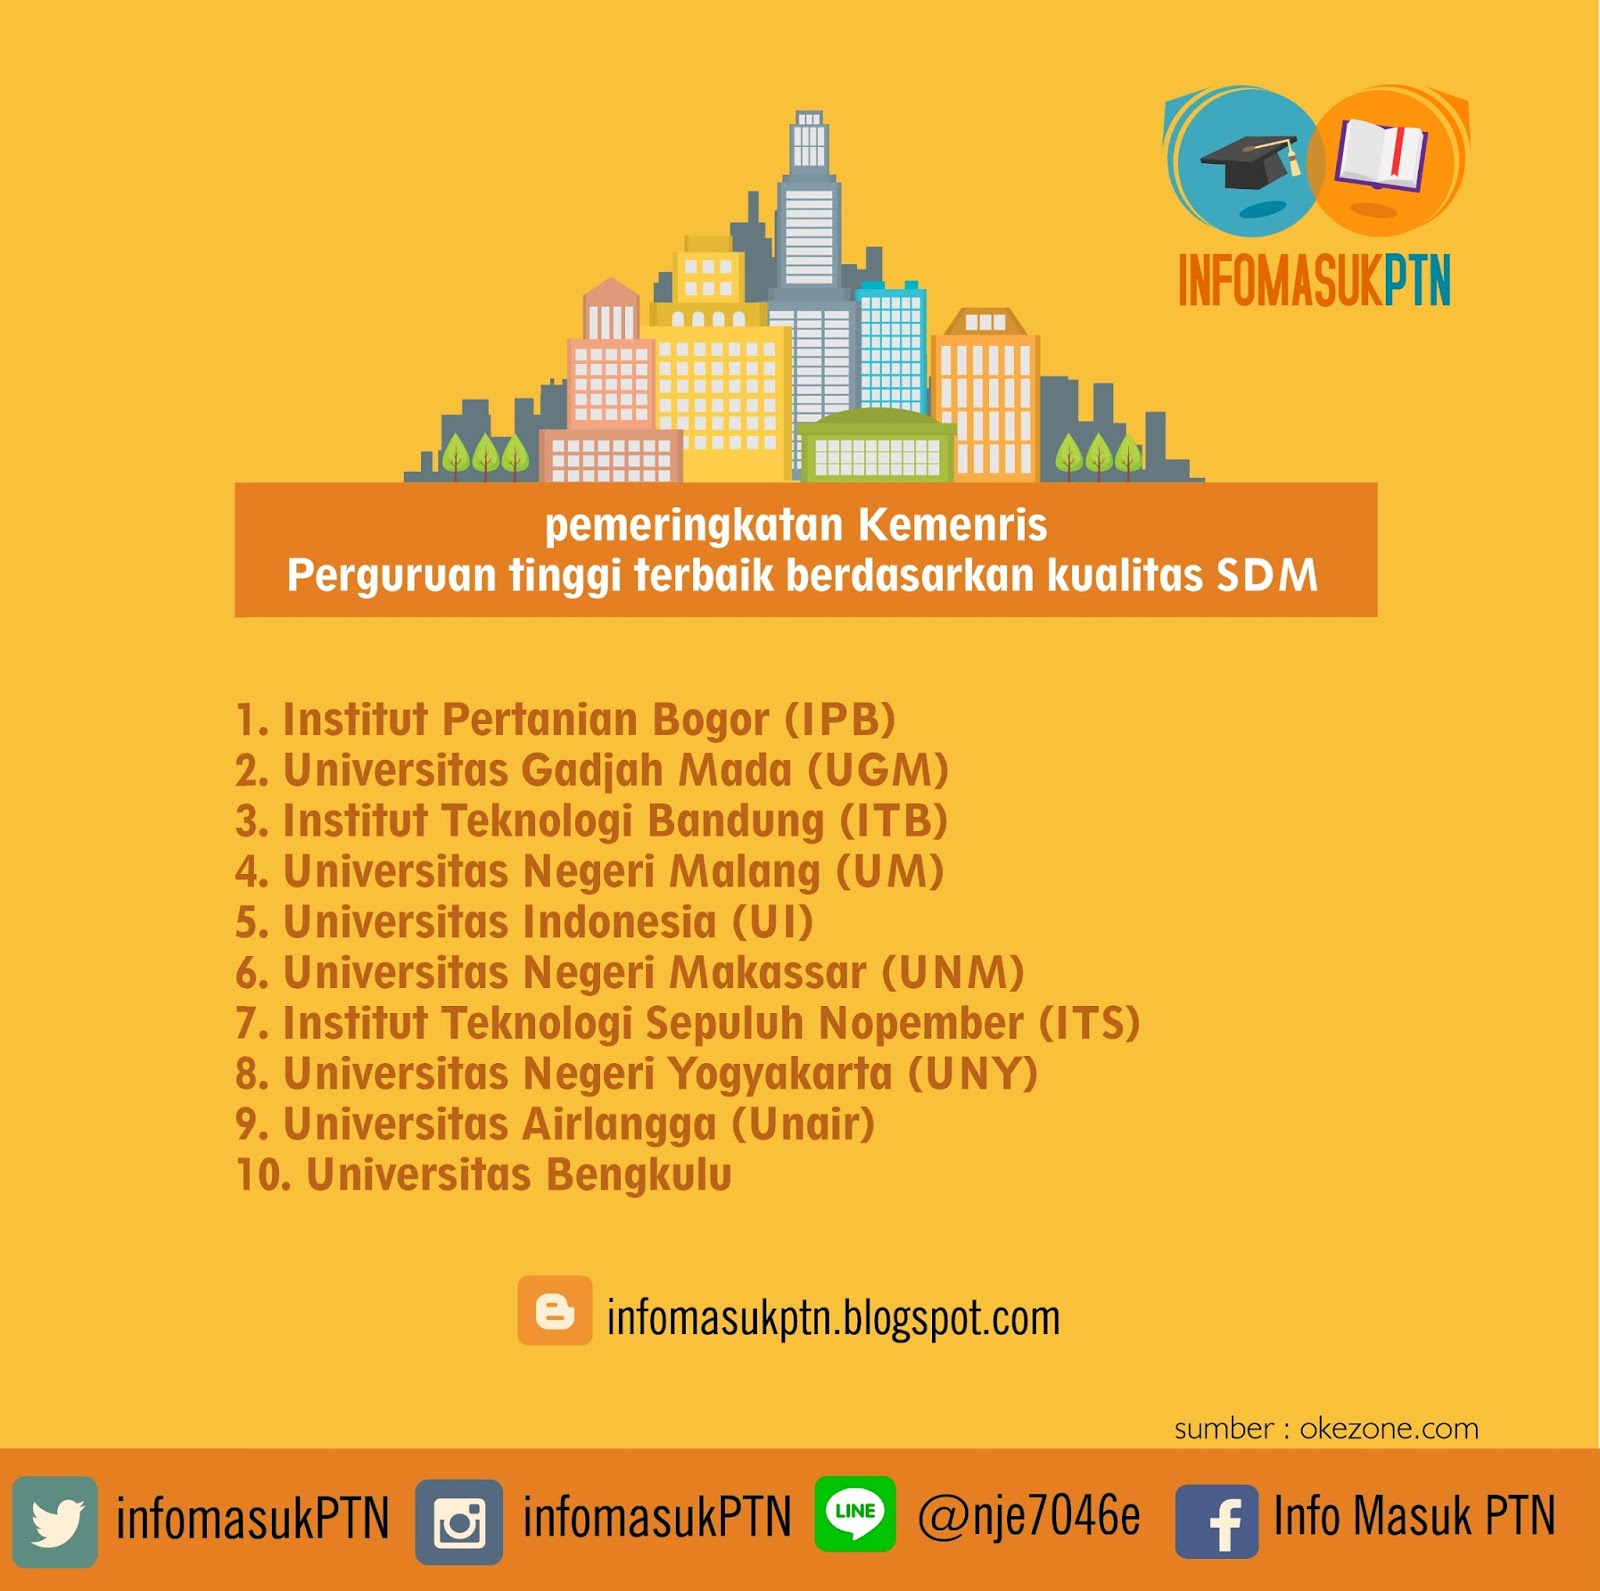 5 Universitas Indonesia UI 6 Universitas Negeri Makassar UNM 7 Institut Teknologi Sepuluh Nopember ITS 8 Universitas Negeri Yogyakarta